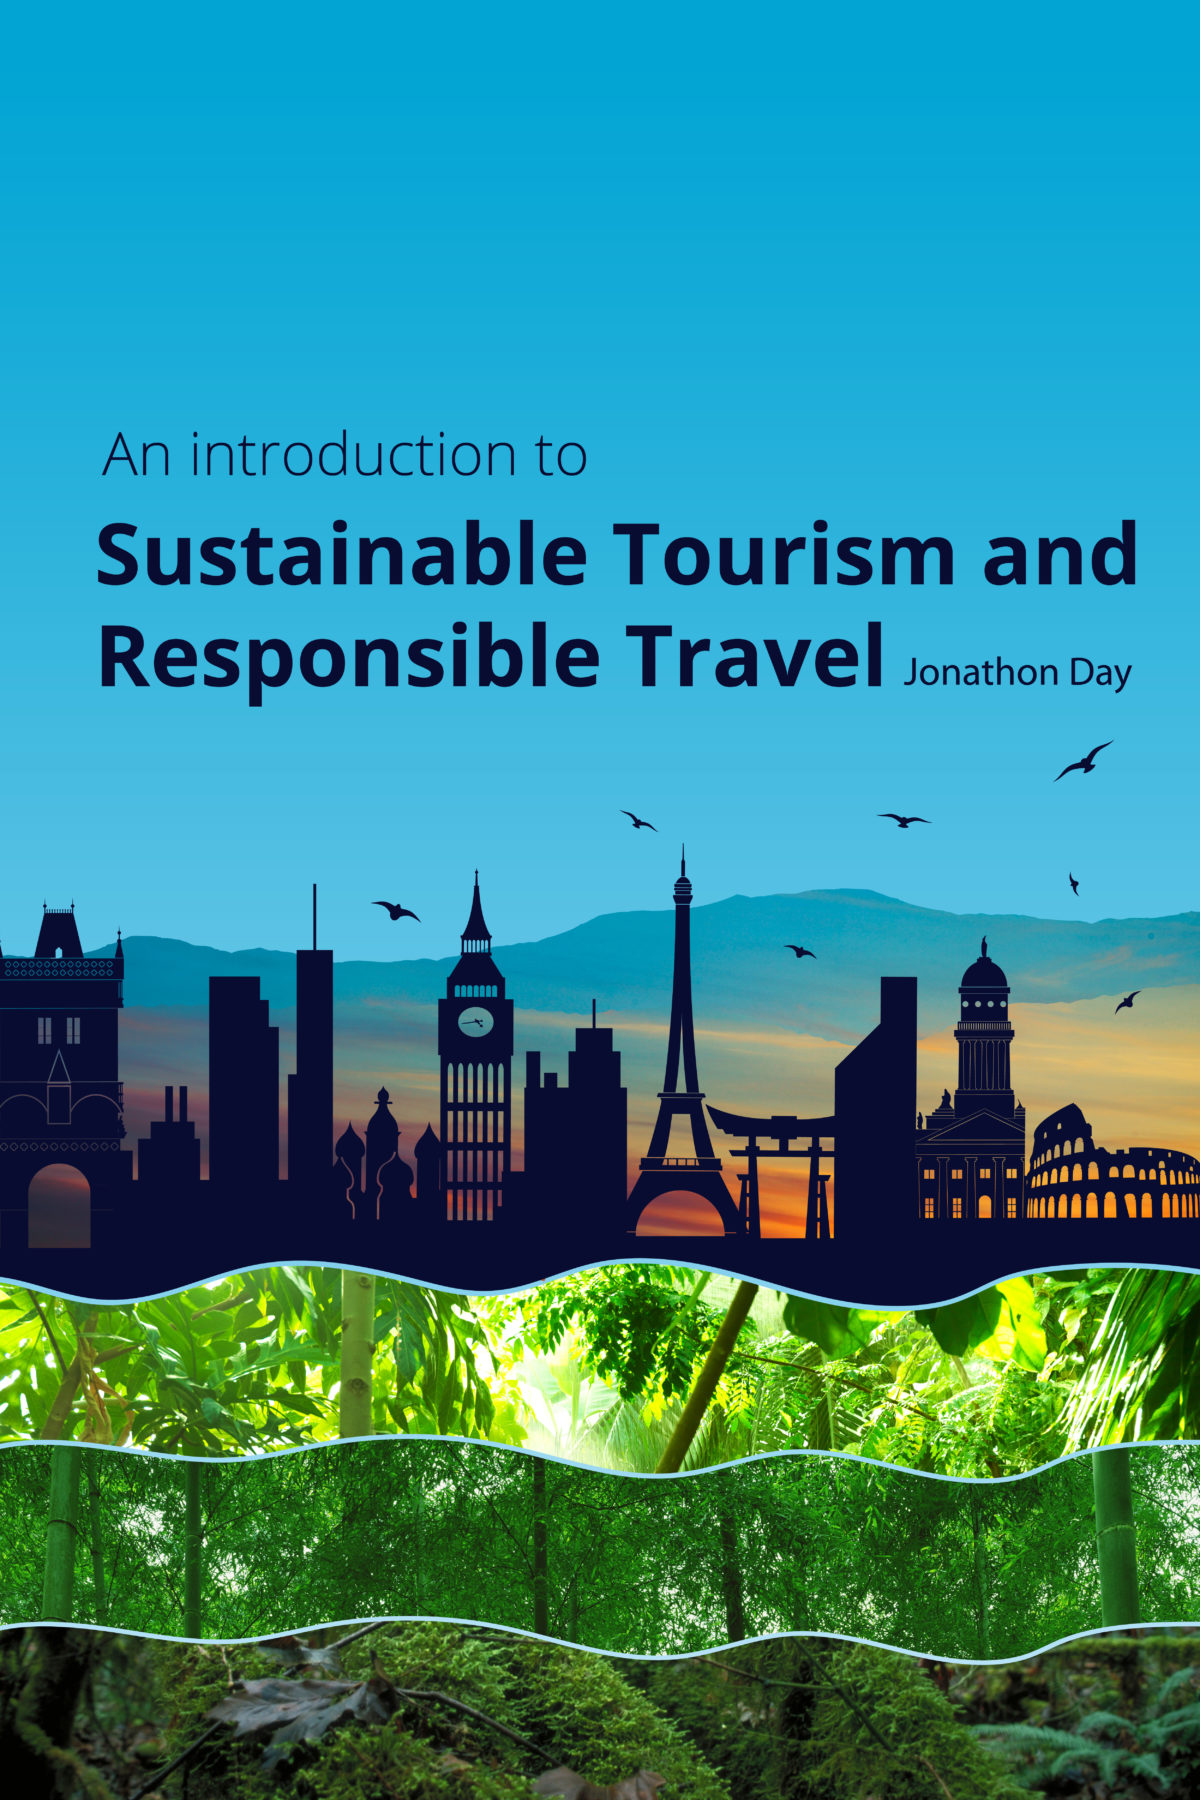 responsible tourism places to visit